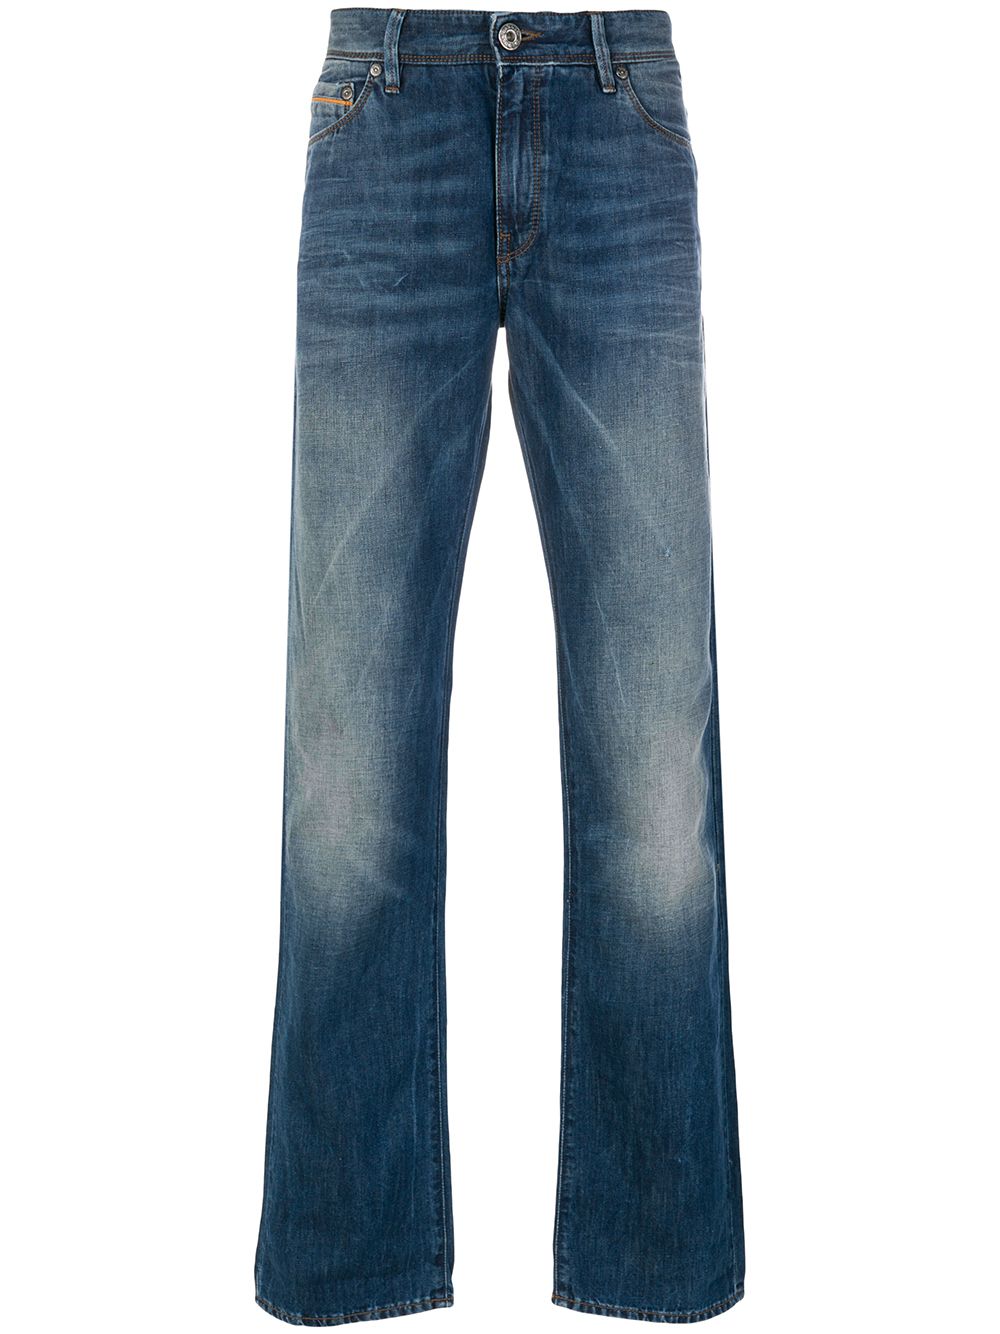 фото Boss джинсы стандартного кроя